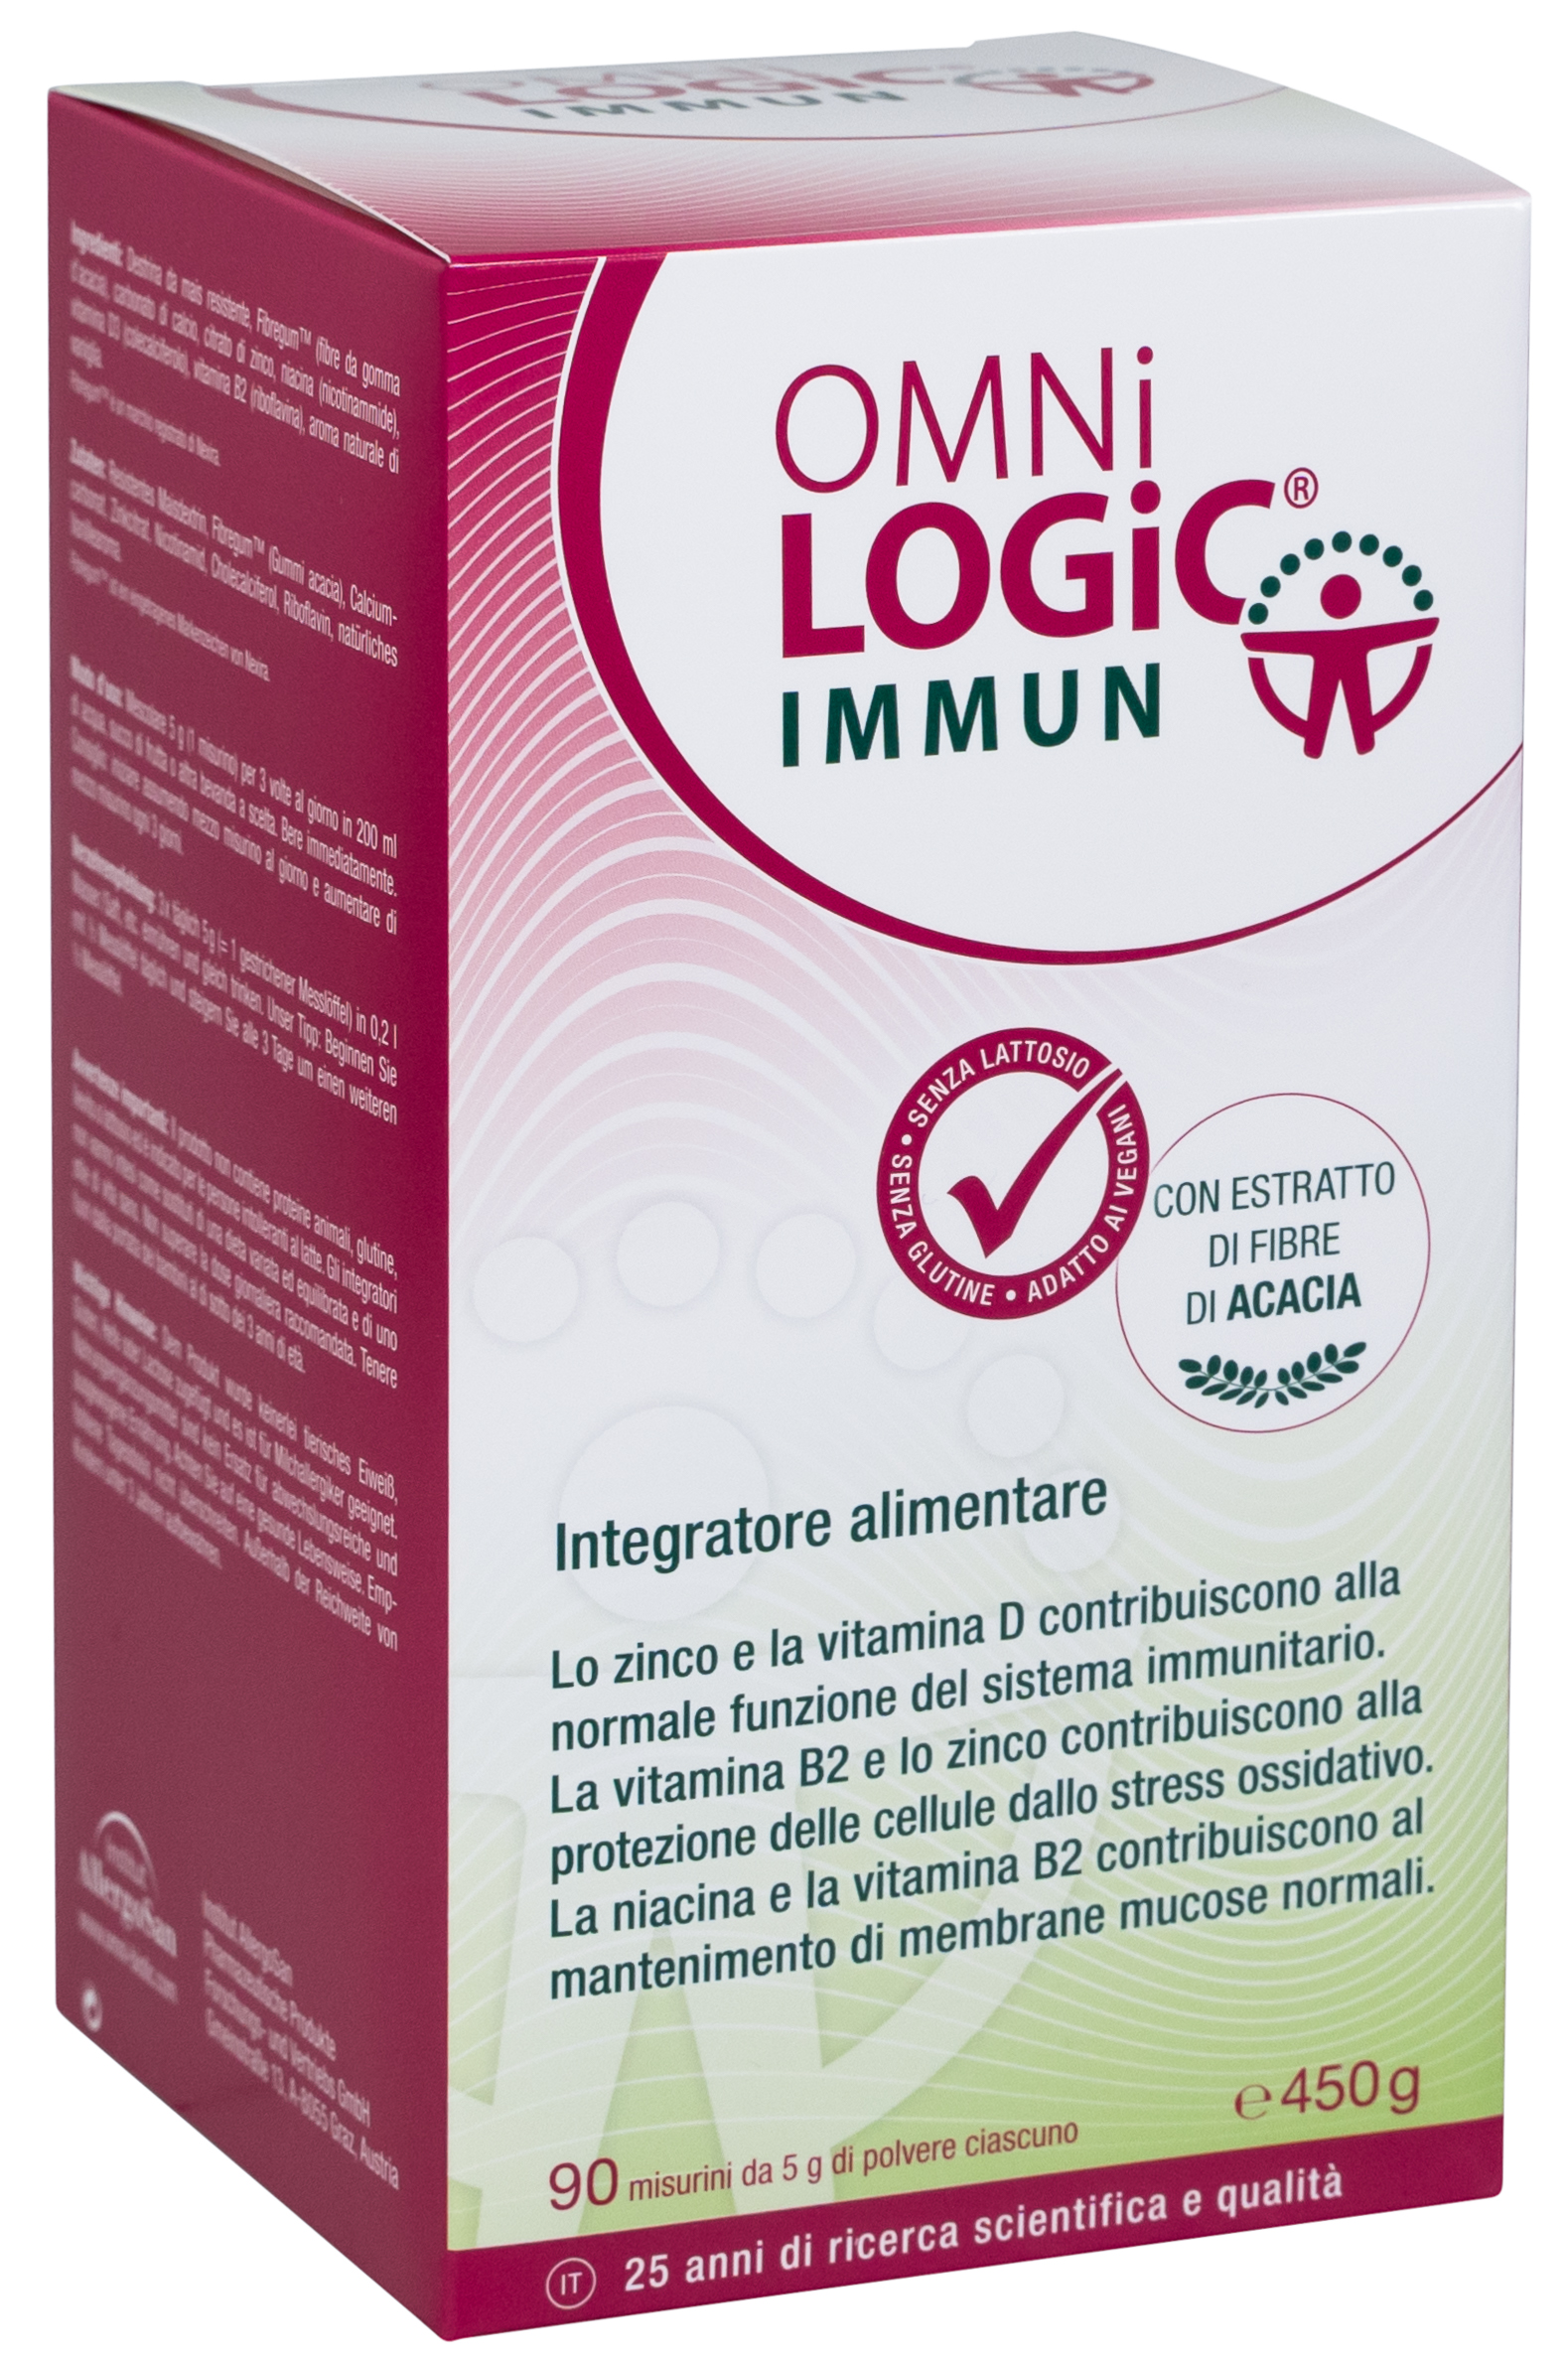 Omni Logic(R) Immun Allergosan 450g